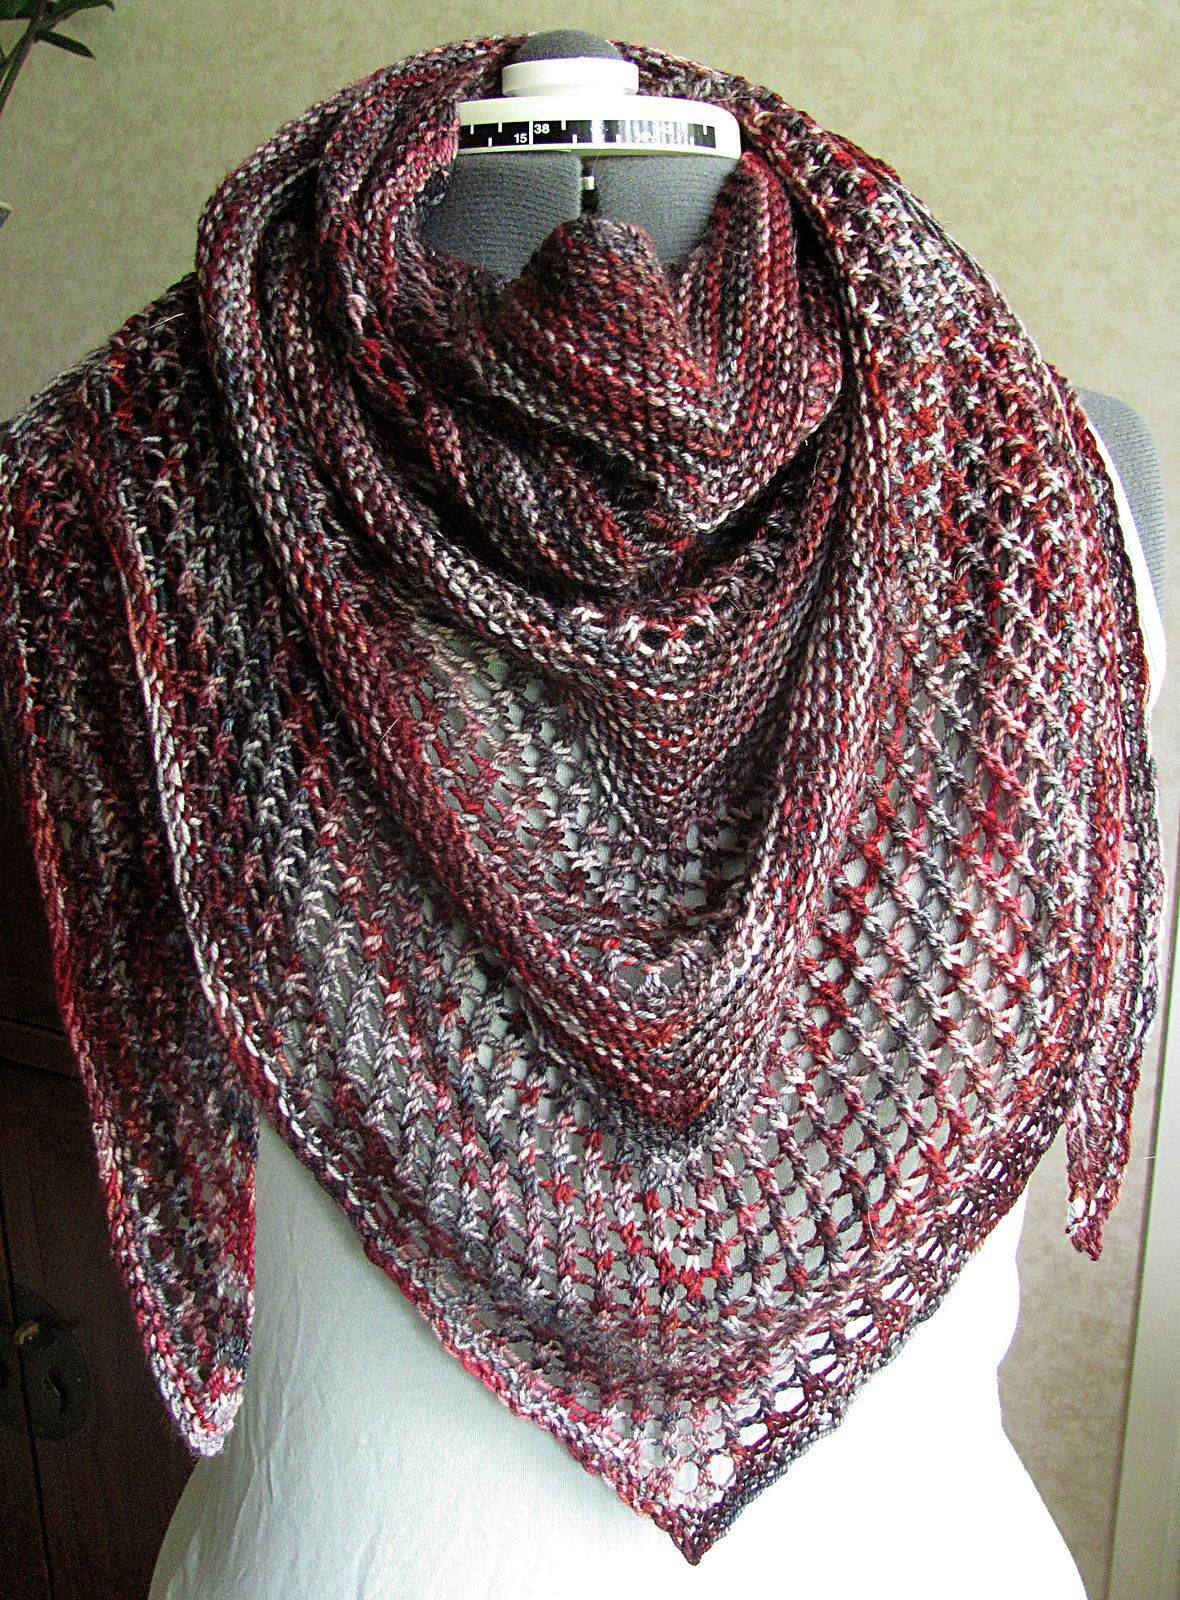 Ravelry Knitting Patterns Free Reyna Shawl Noora Laivola Free Knitted Pattern Ravelry